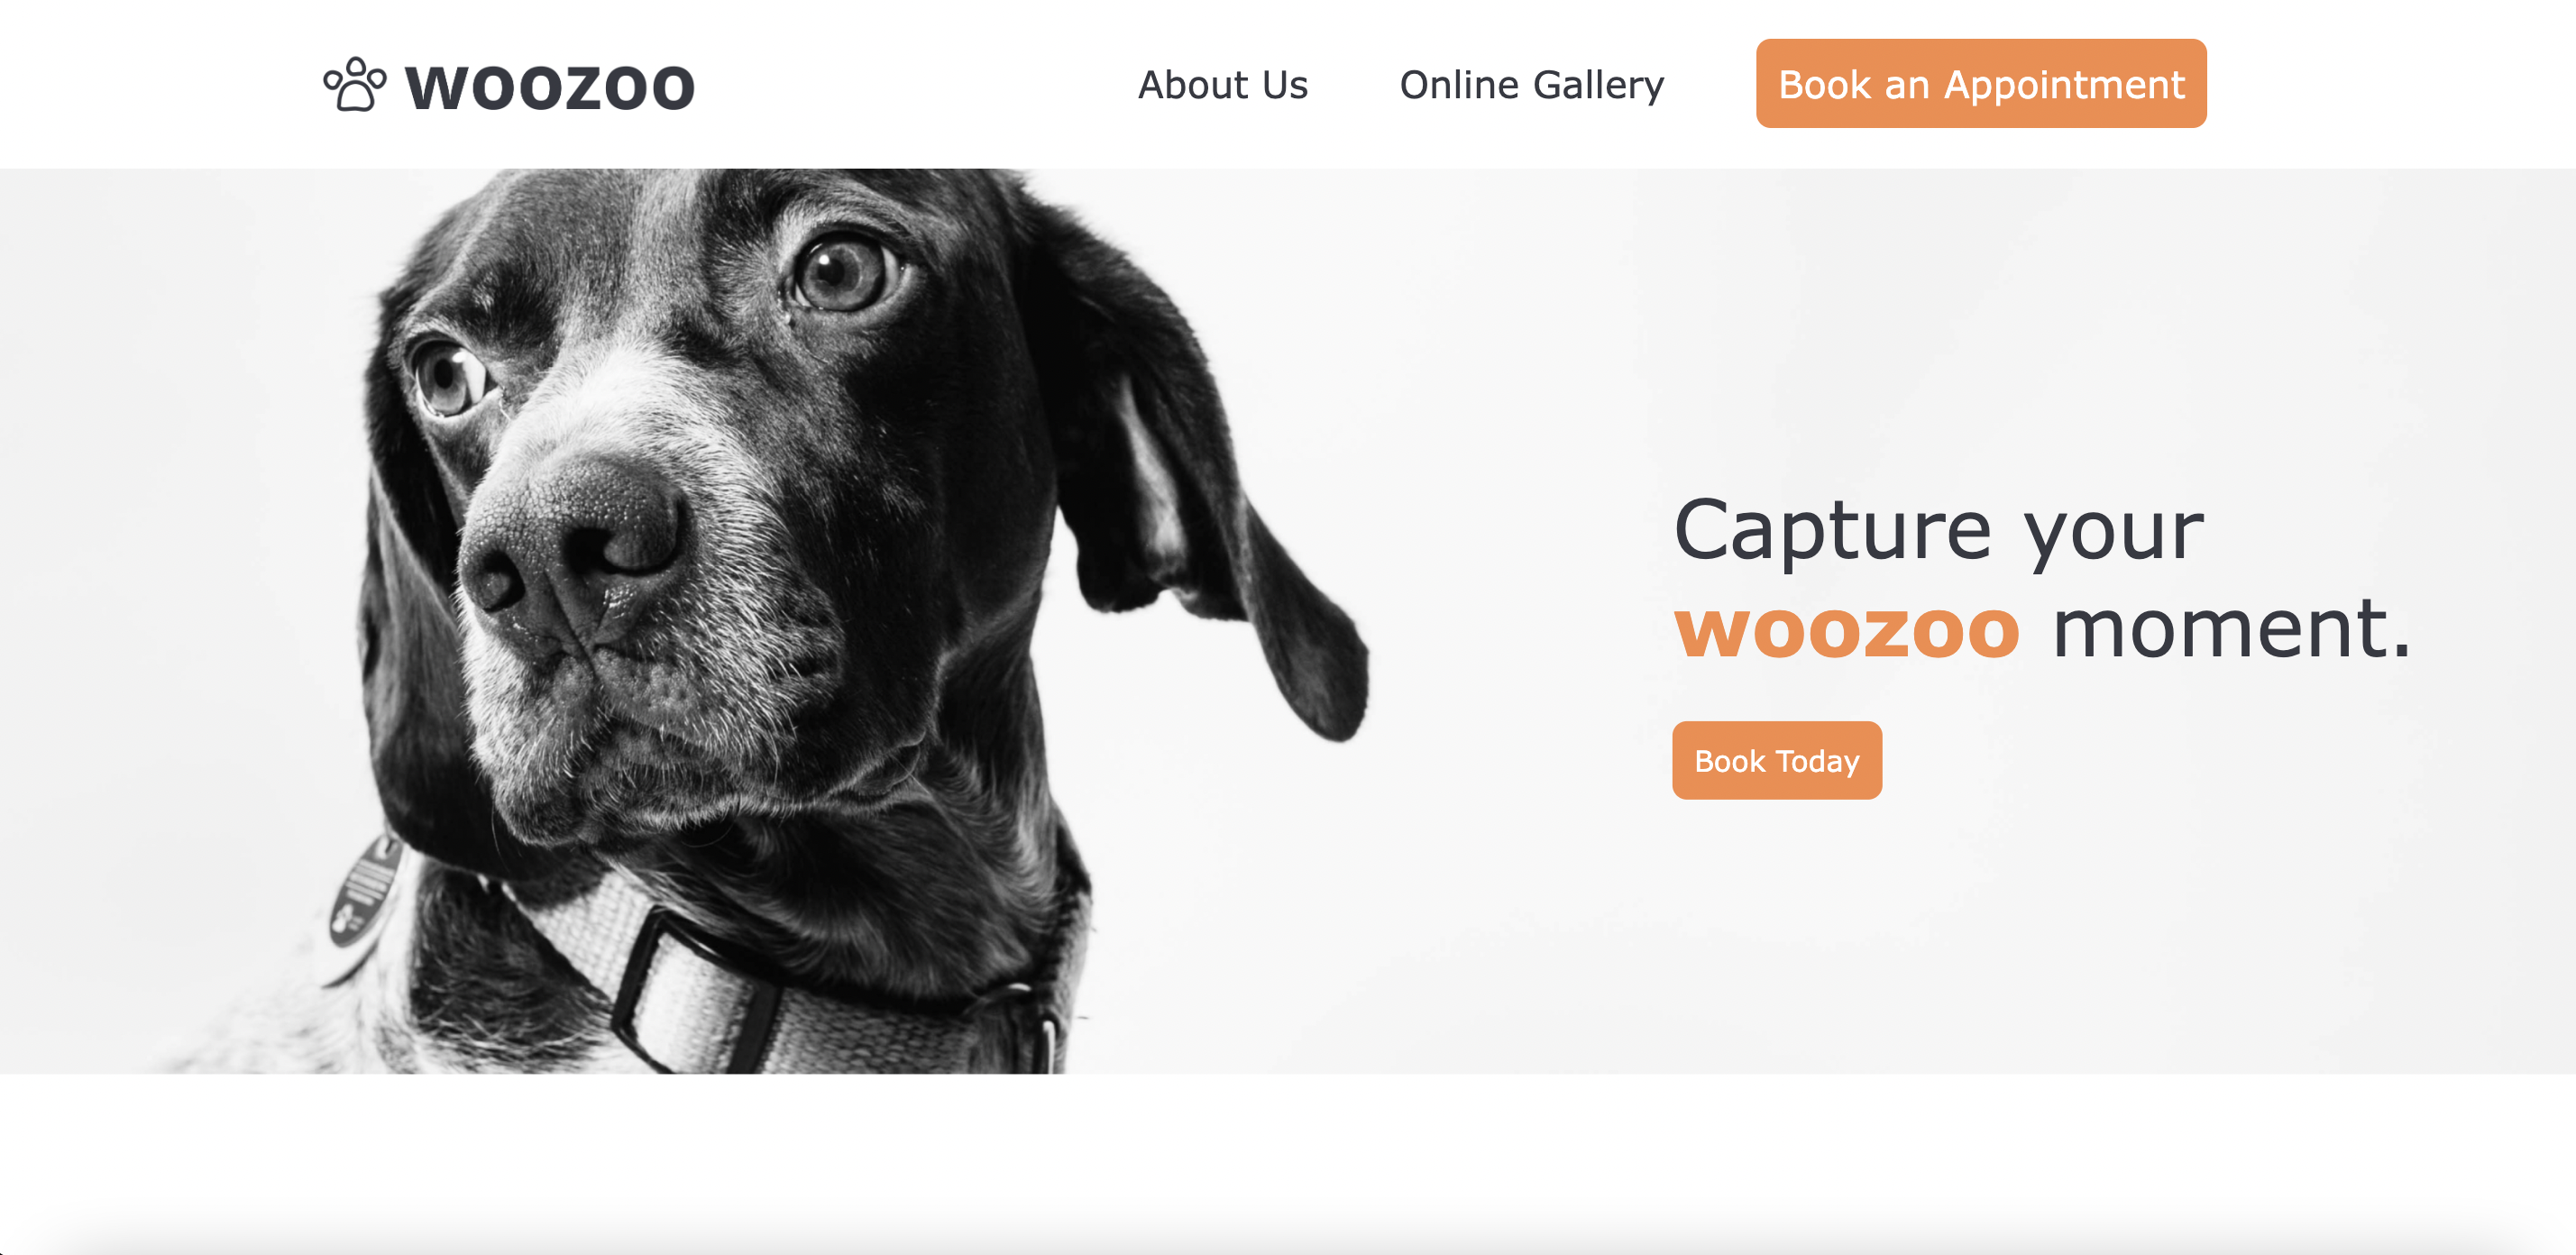 woozoo home screen image with a dog